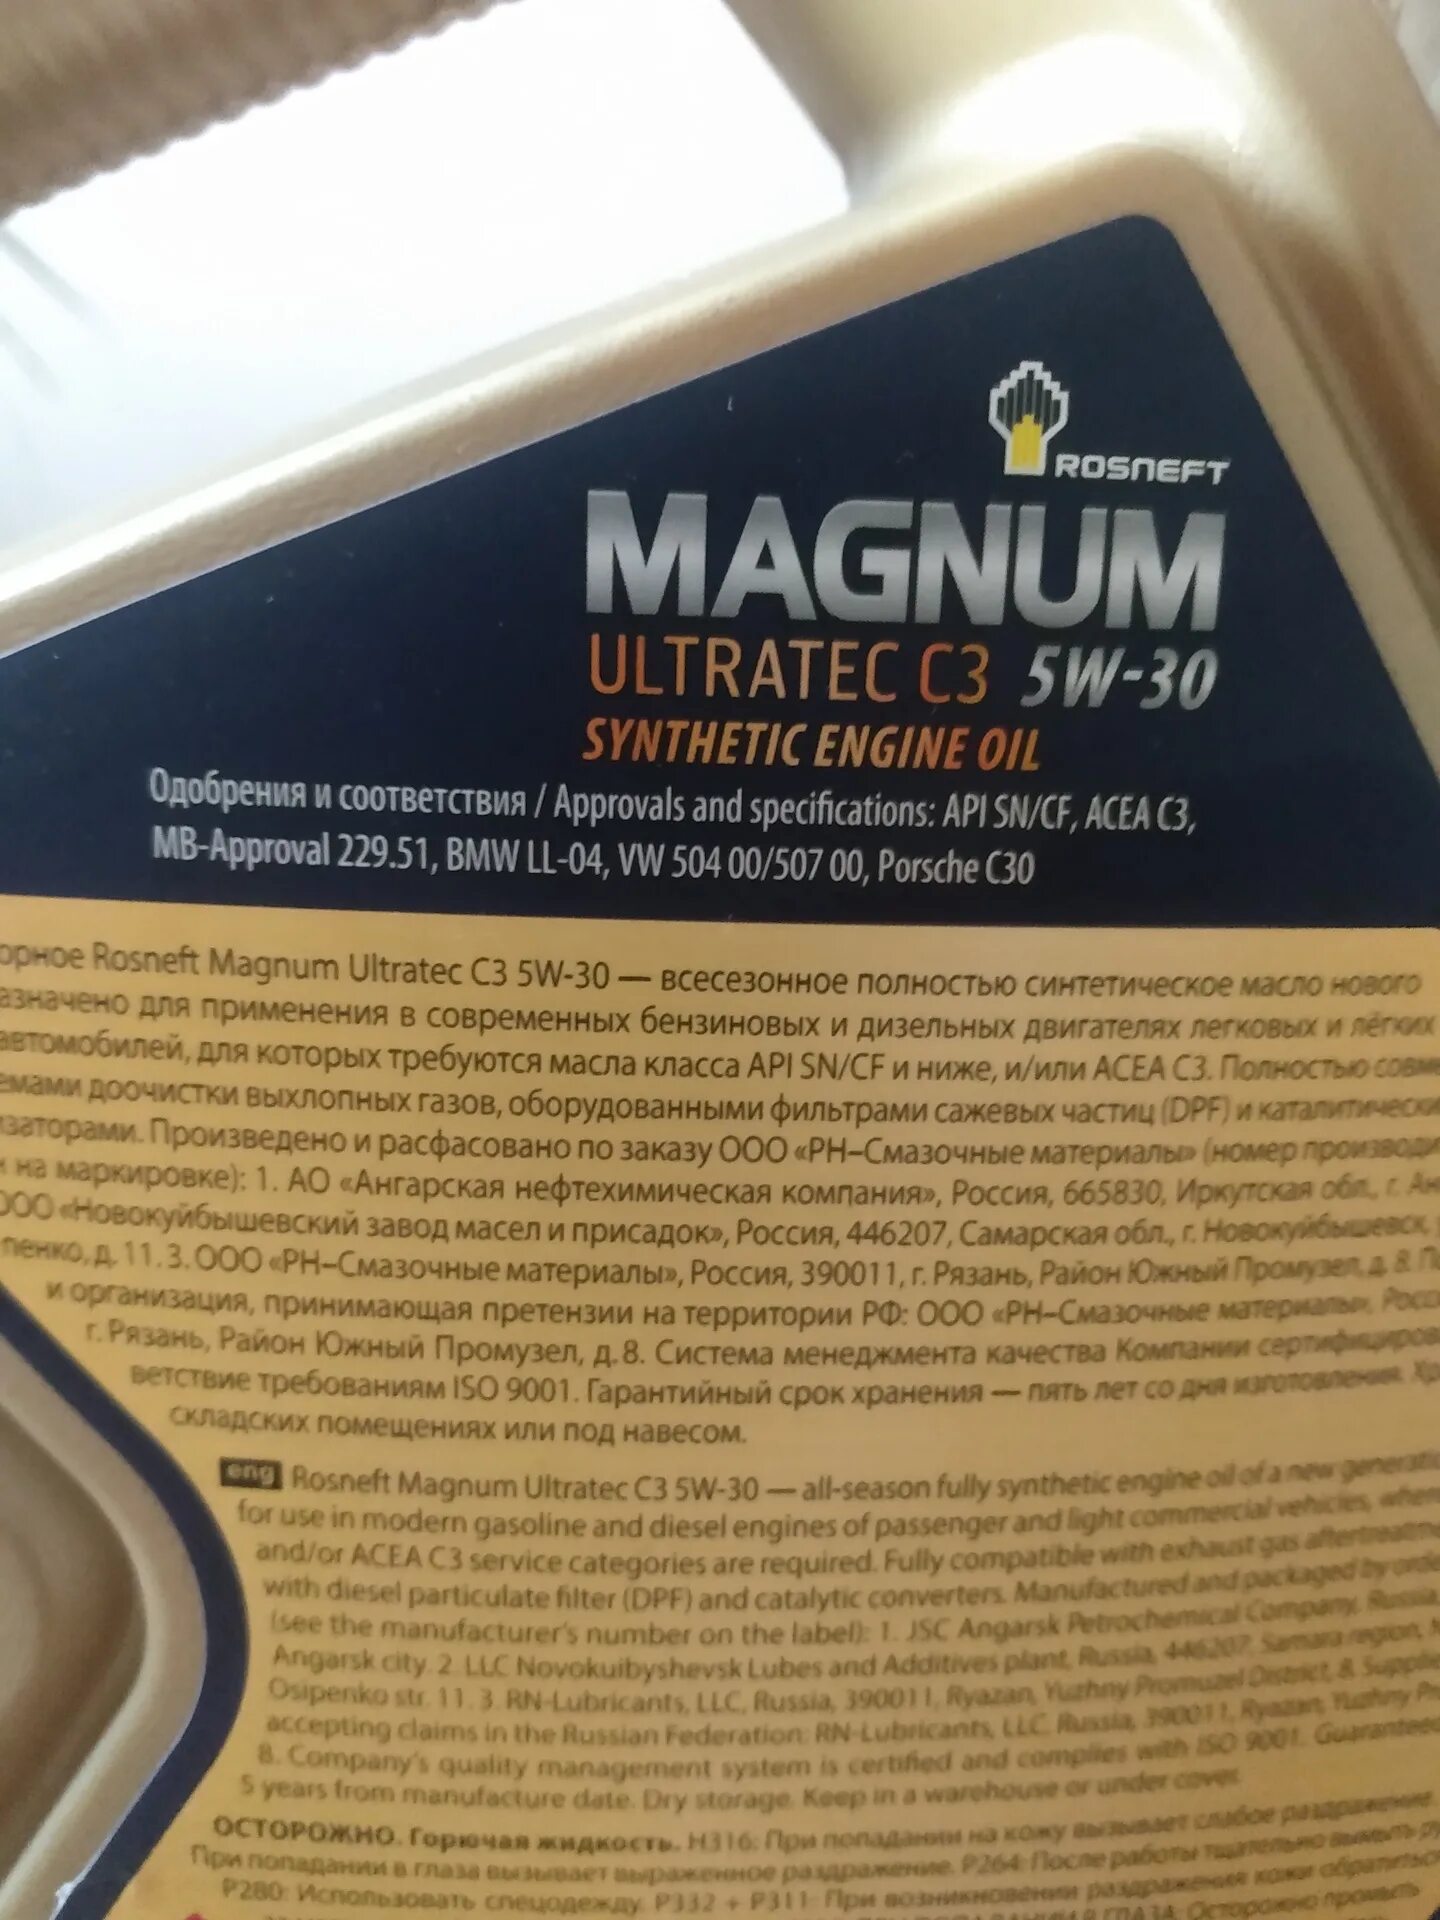 Magnum Ultratec c3 5w-30. Rosneft Magnum Ultratec c3 5w-30. Rosneft Magnum Ultratec. Масло Роснефть Магнум 5w30.